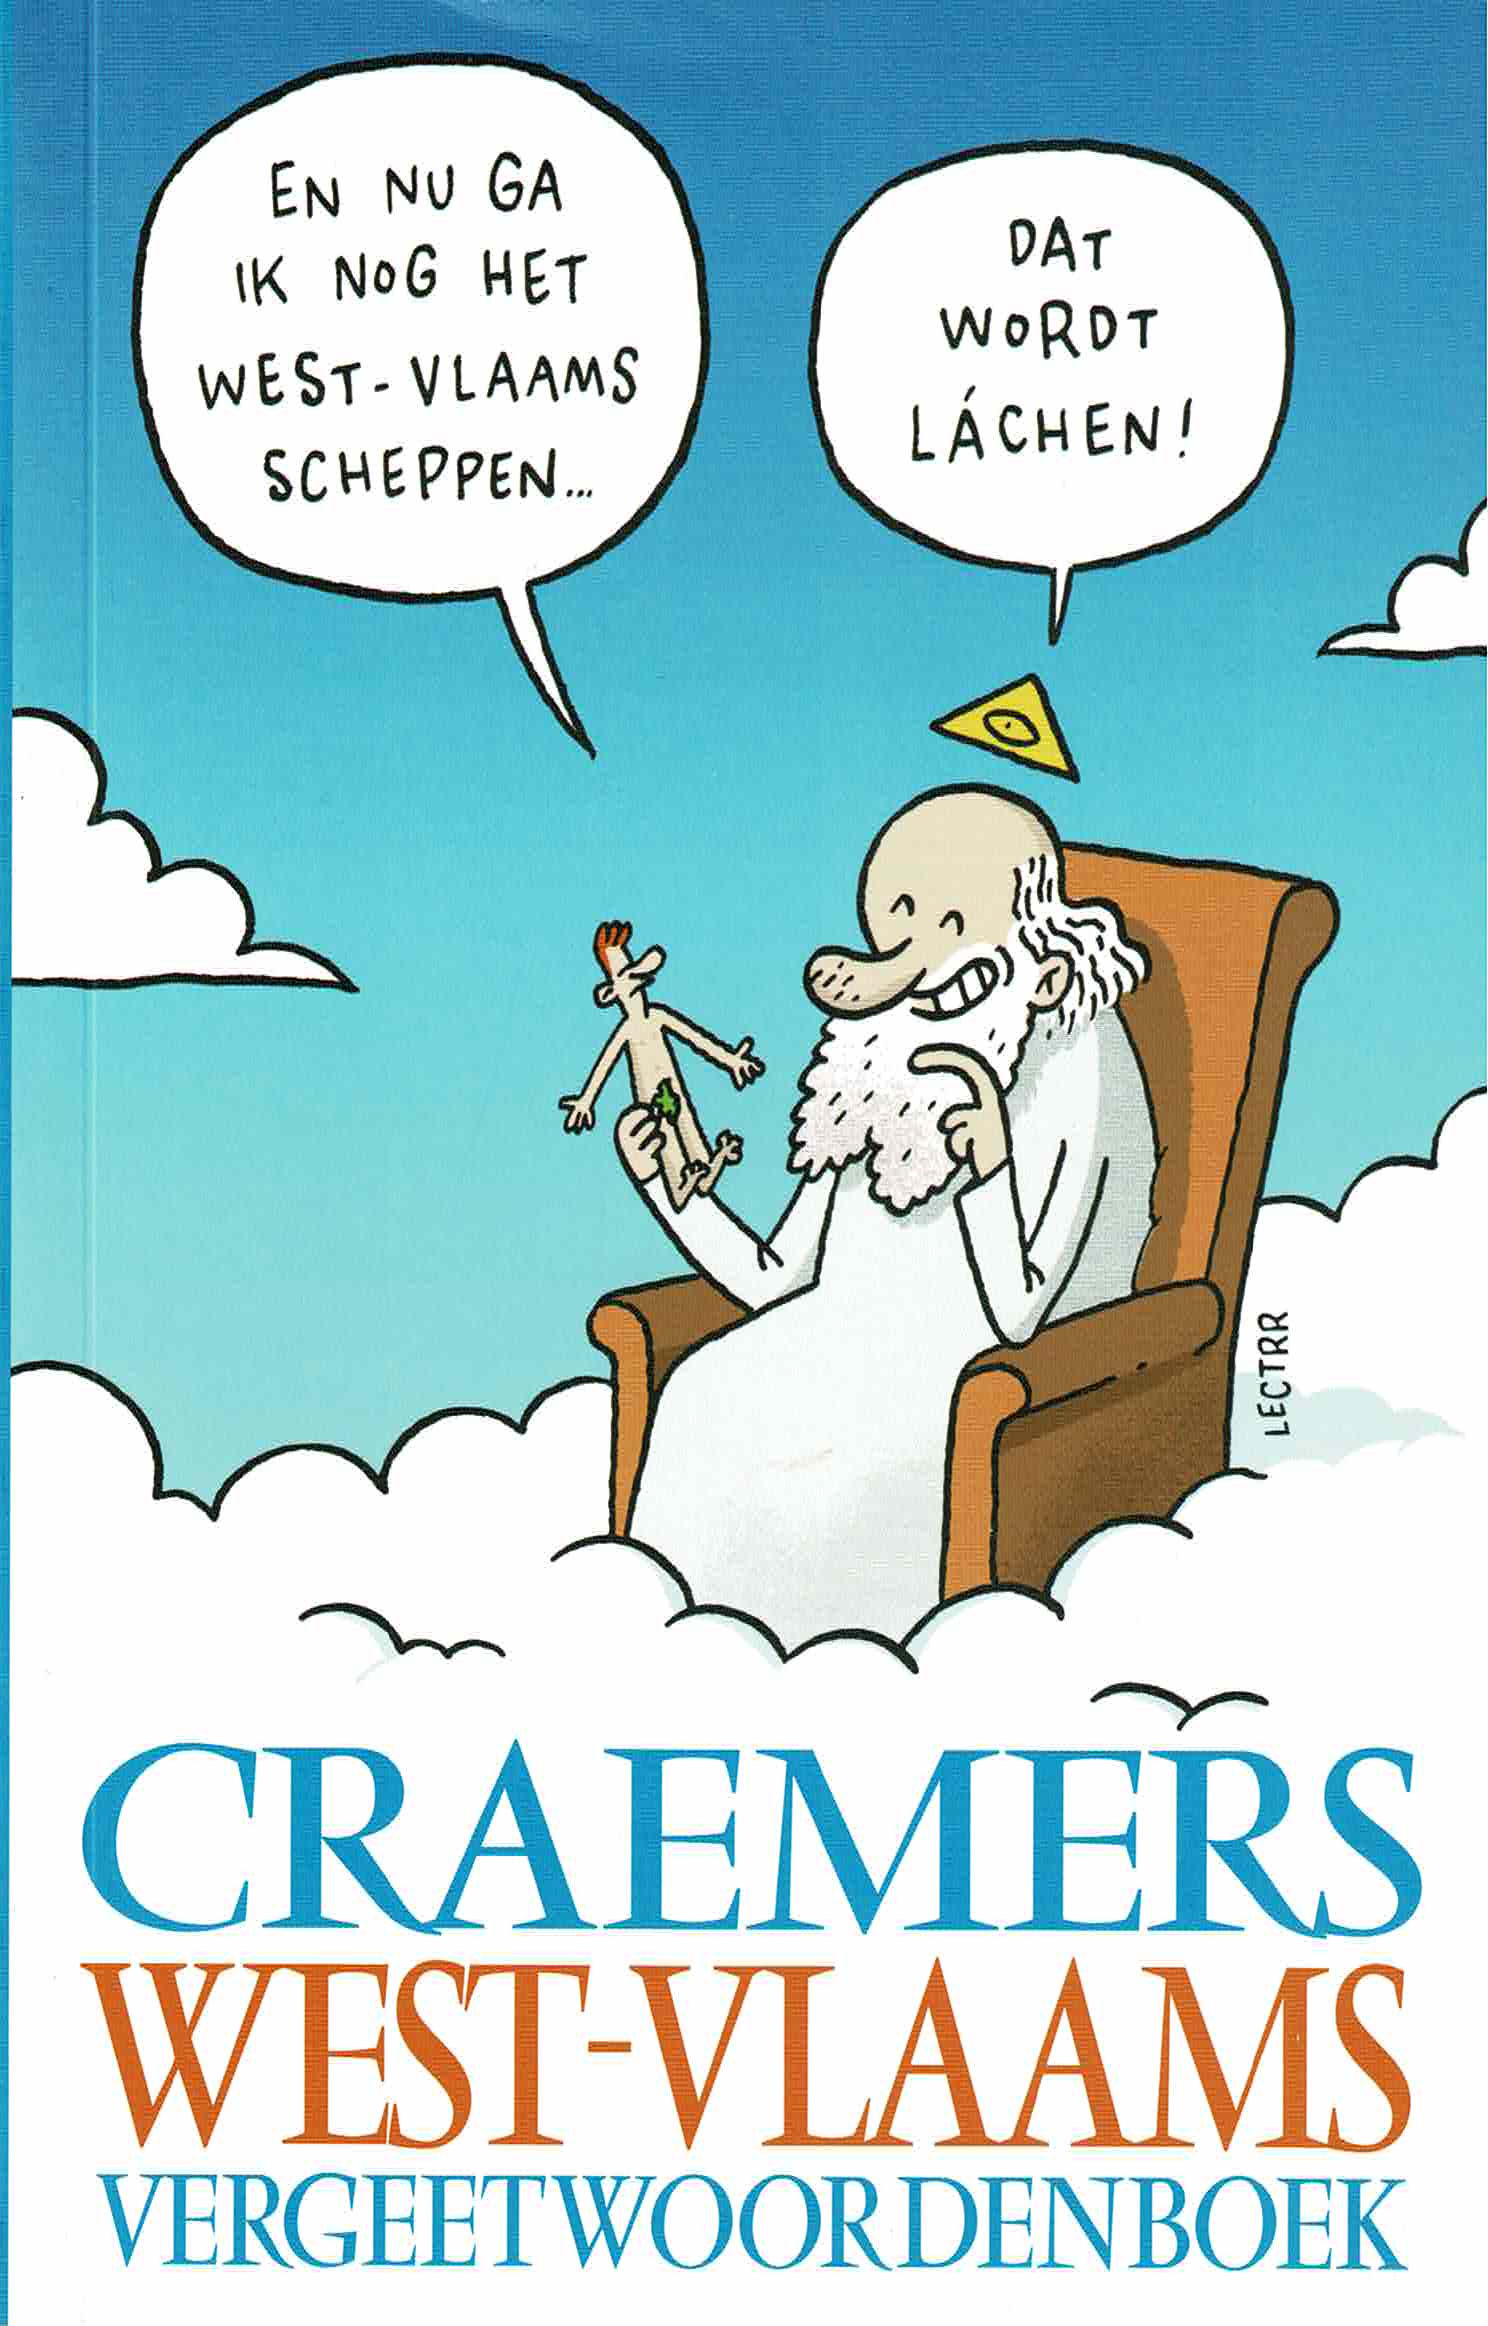 Craemers West-Vlaams vergeetwoordenboek - uitgeverij Bibliodroom